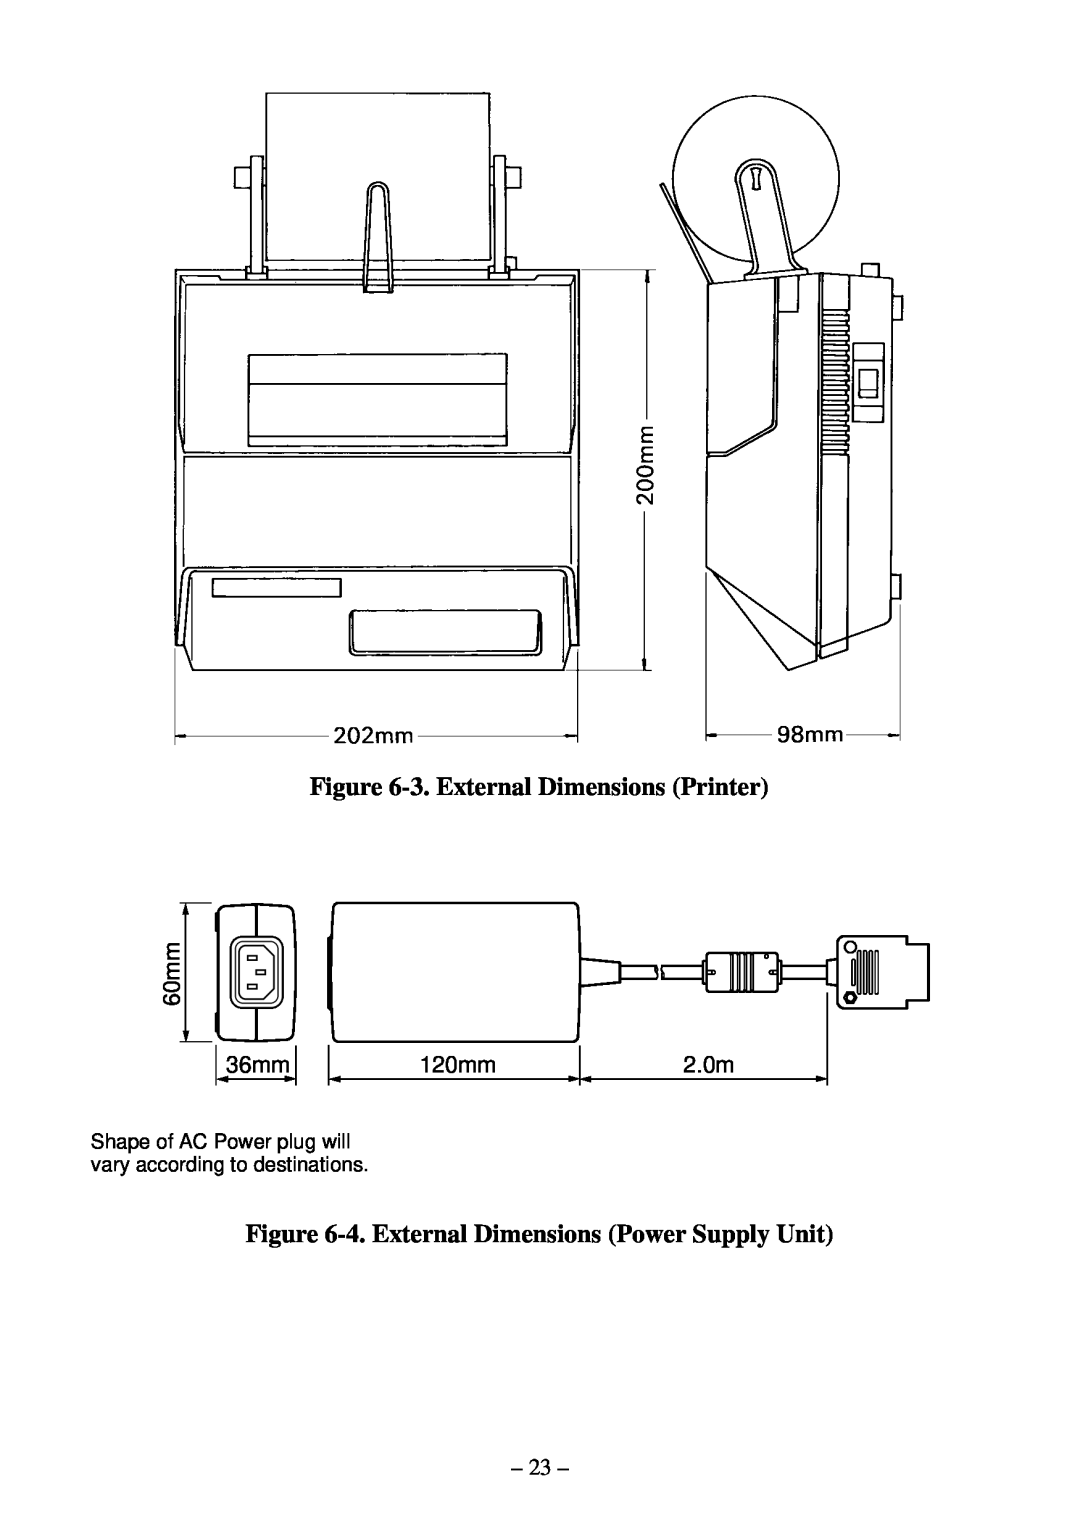 Star Micronics DP8340RC 3. External Dimensions Printer, 4. External Dimensions Power Supply Unit, 60mm 36mm, 120mm, 2.0m 